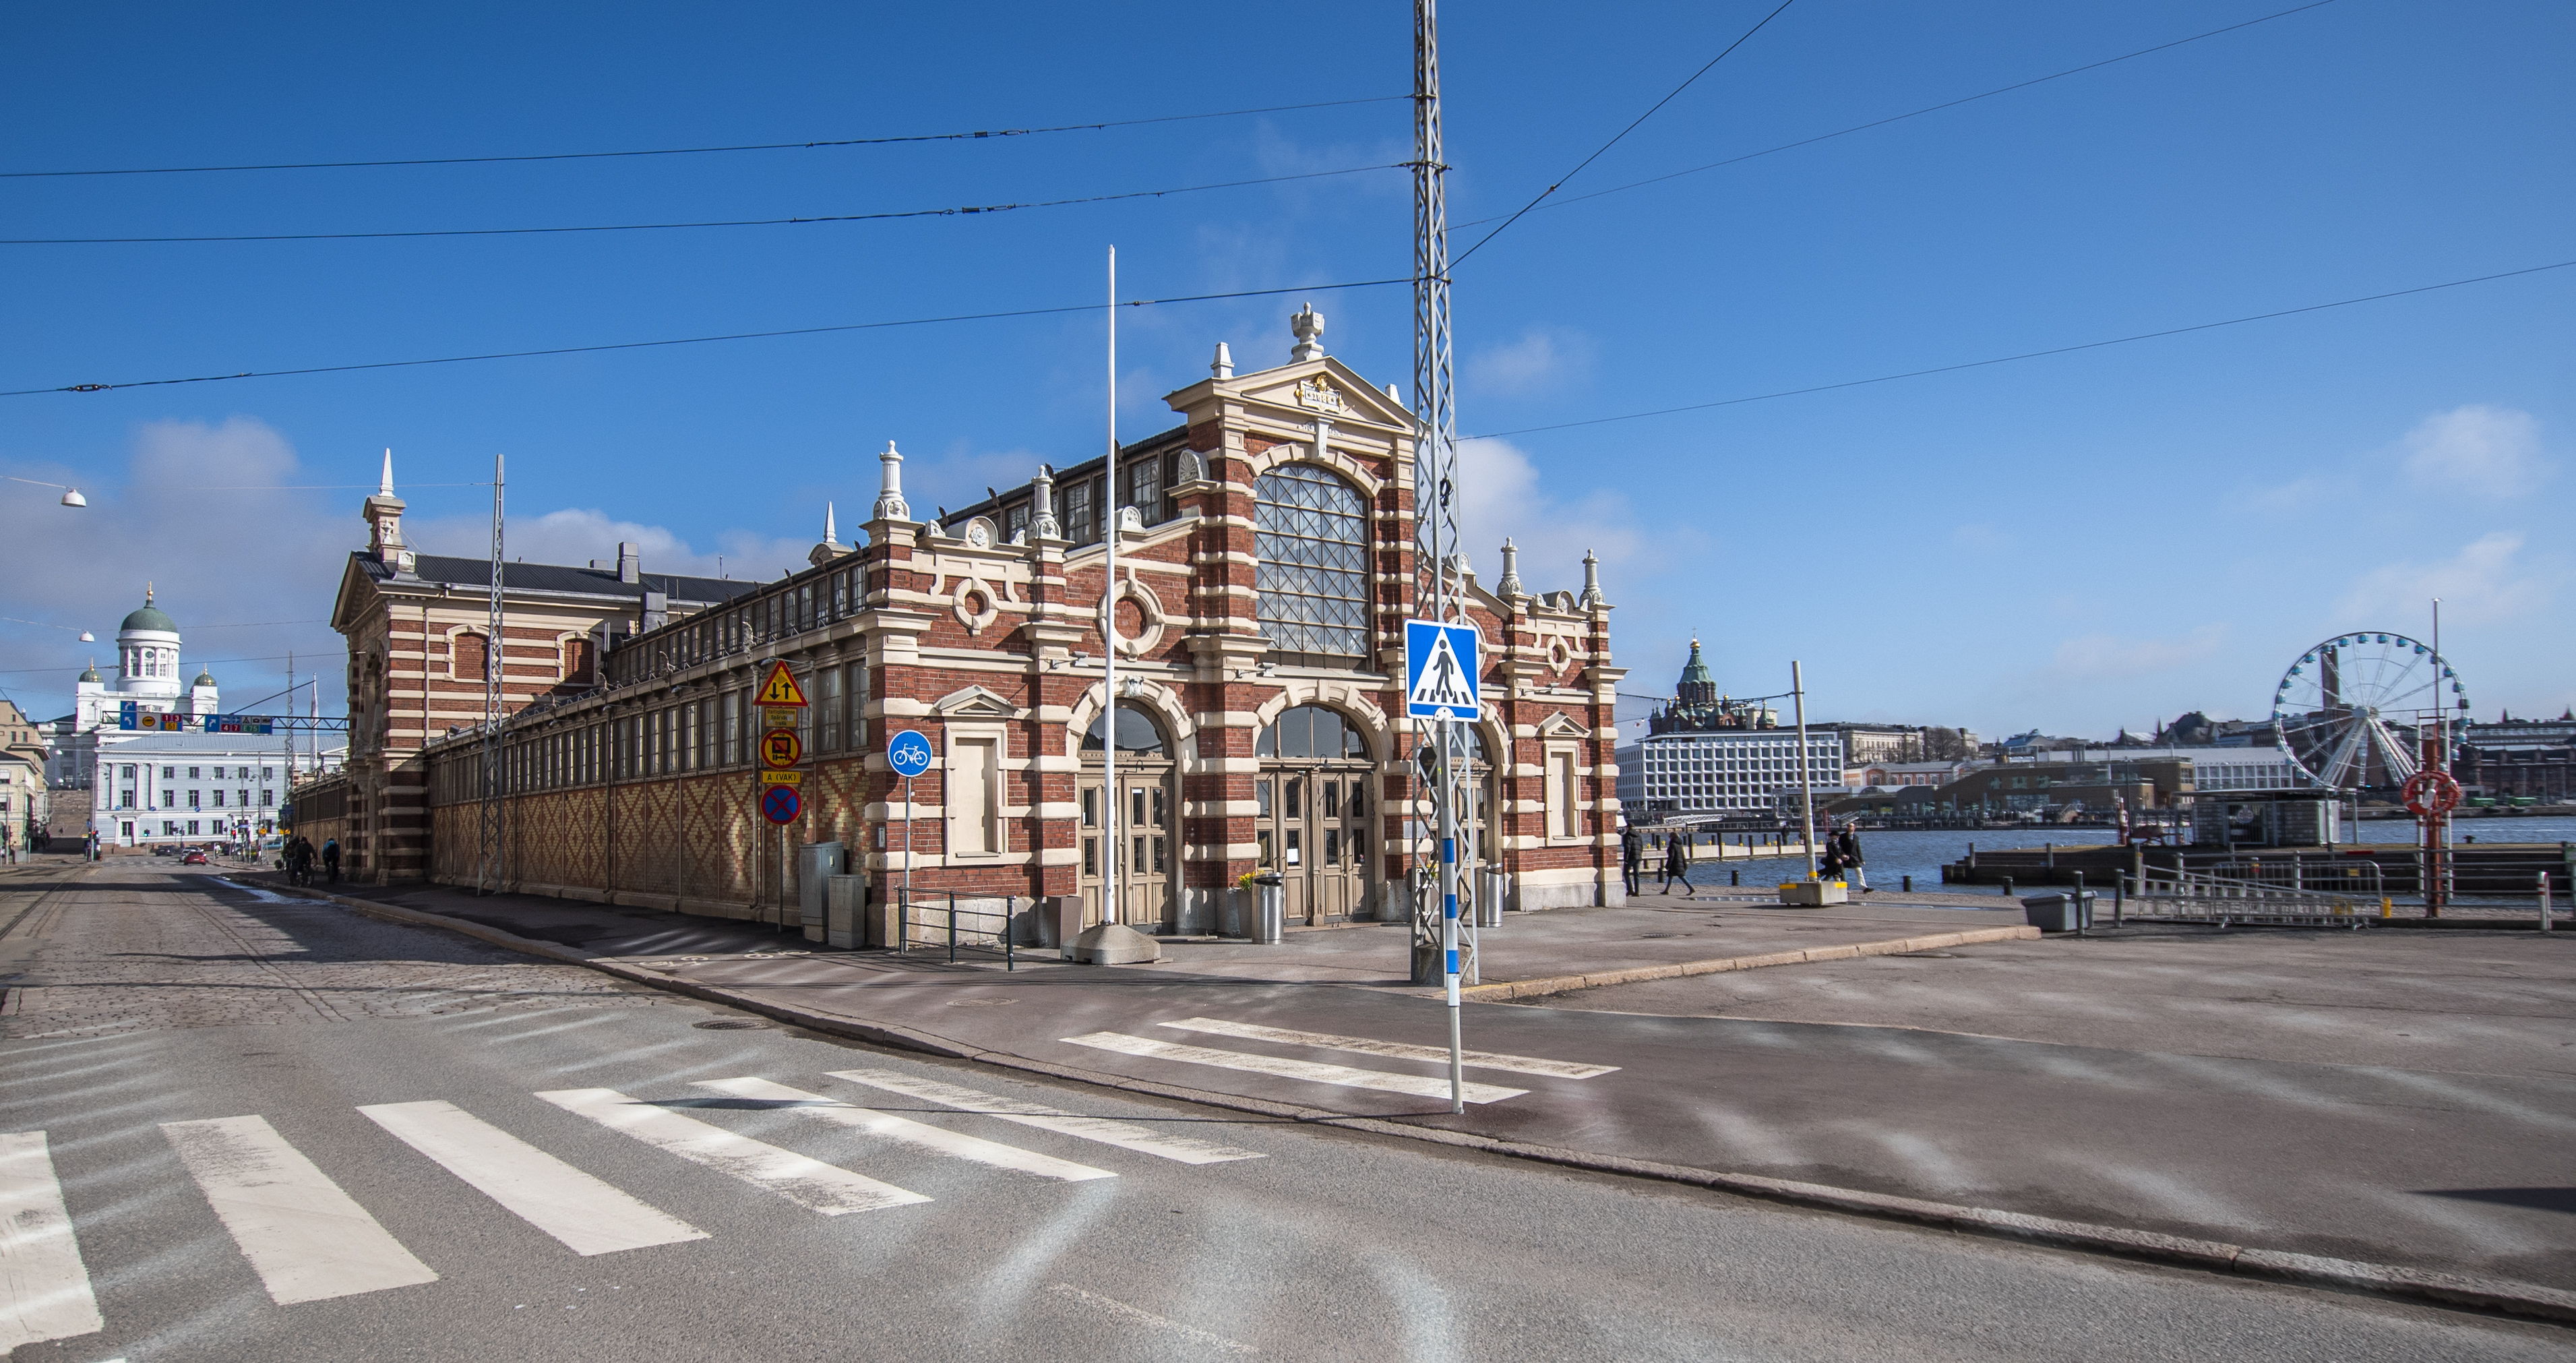 The Old Market Hall in Helsinki